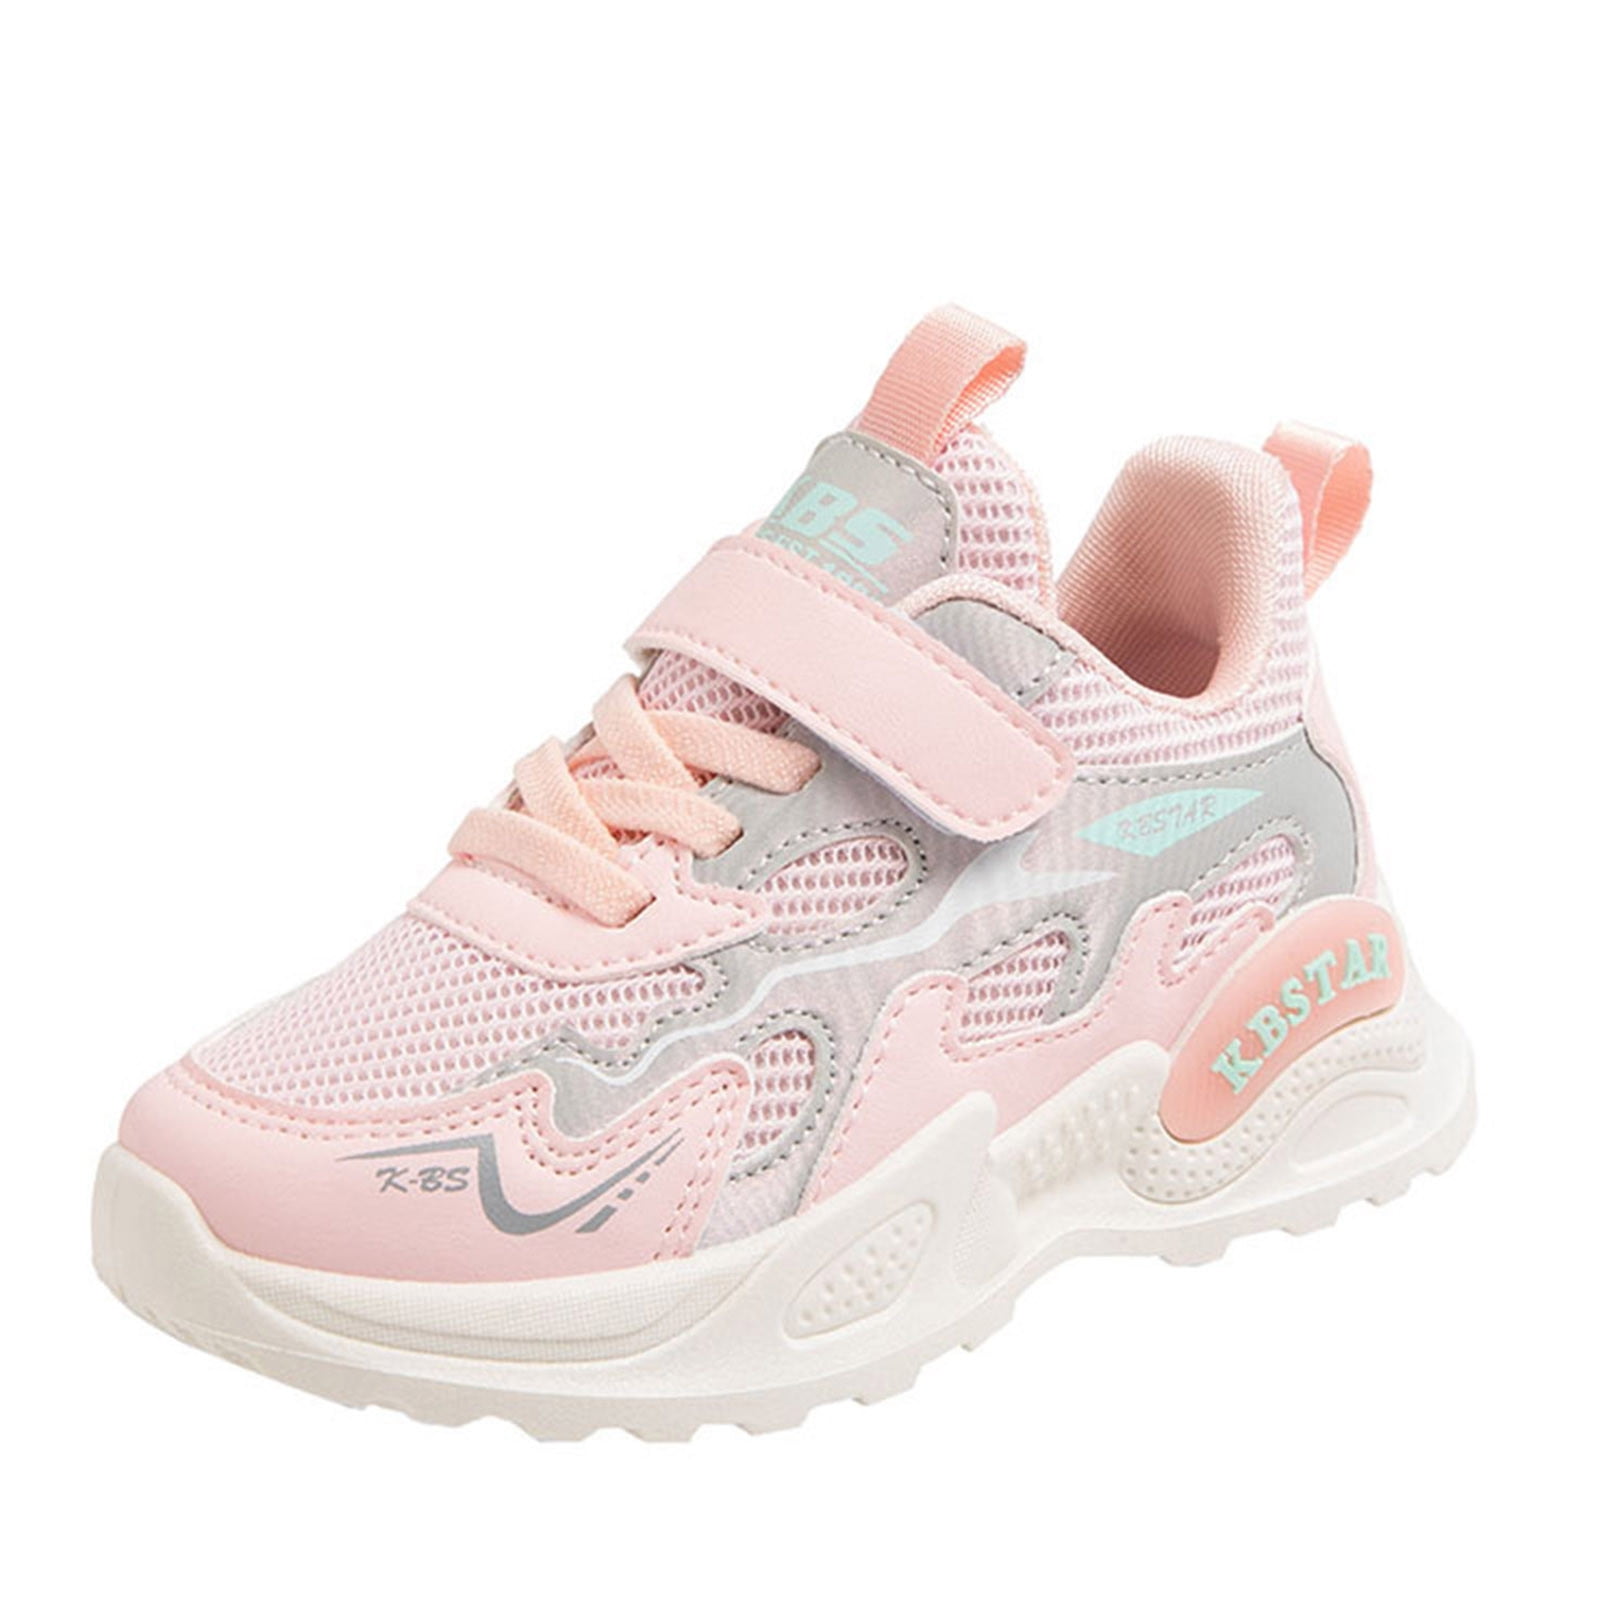 KaLI_store Kids Shoes Girls Lightweight Breathable Tennis Walking Sneakers  Velcro Sport Trail Running Shoe for Toddler/Little/Big Kid,White 